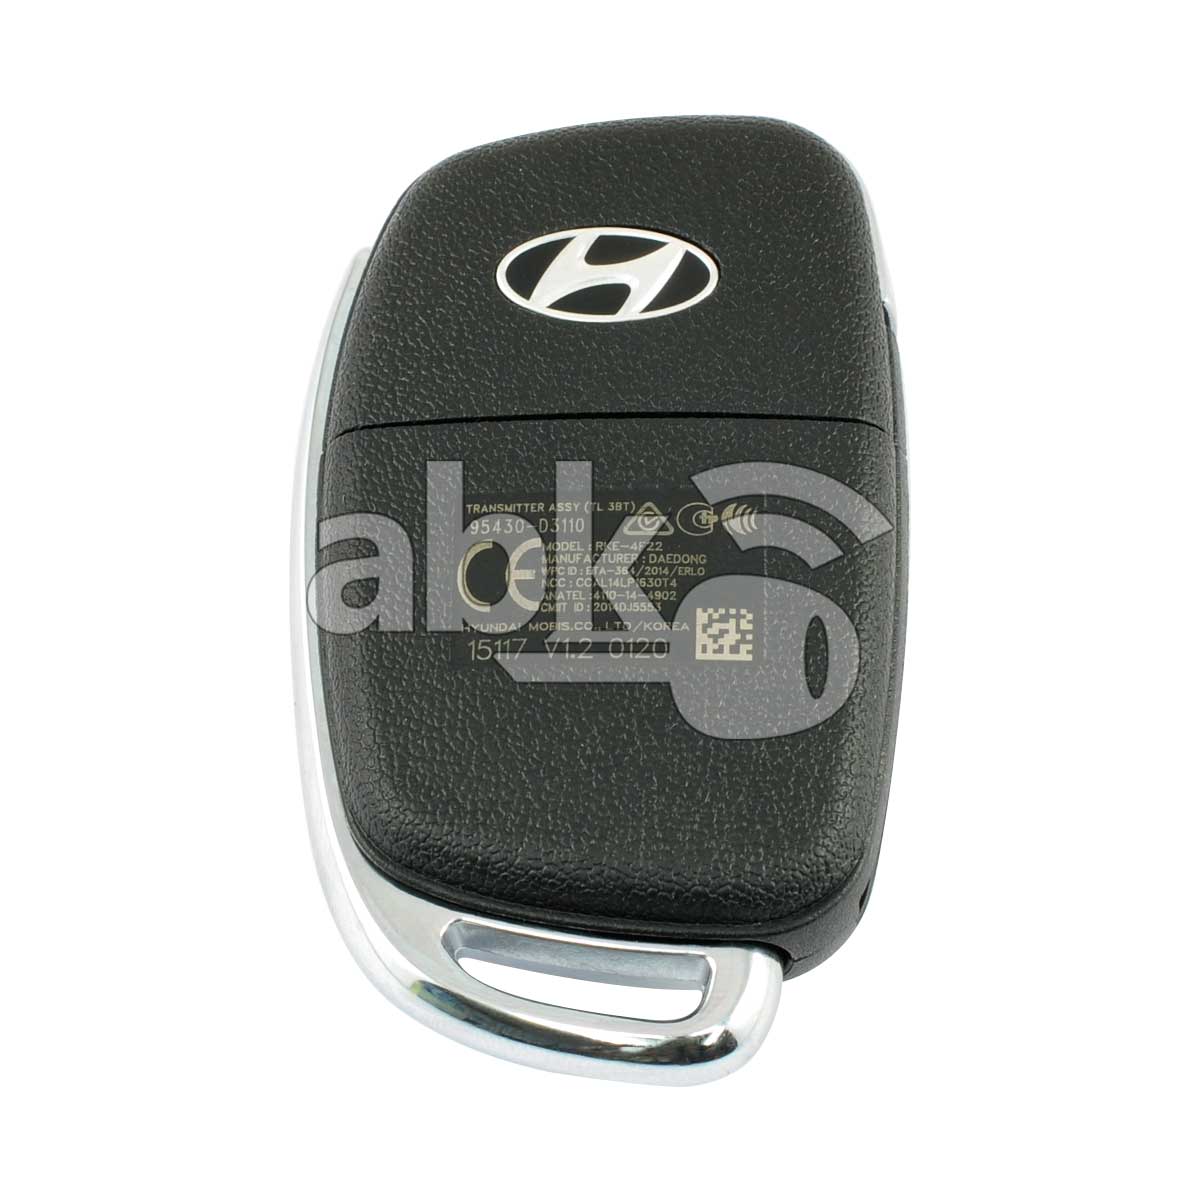 Klappschlüssel für Hyundai i30 - (2012-2017) - 3 knoppen - RKE-4F04 -  95430-A5101 / 95430-A5100